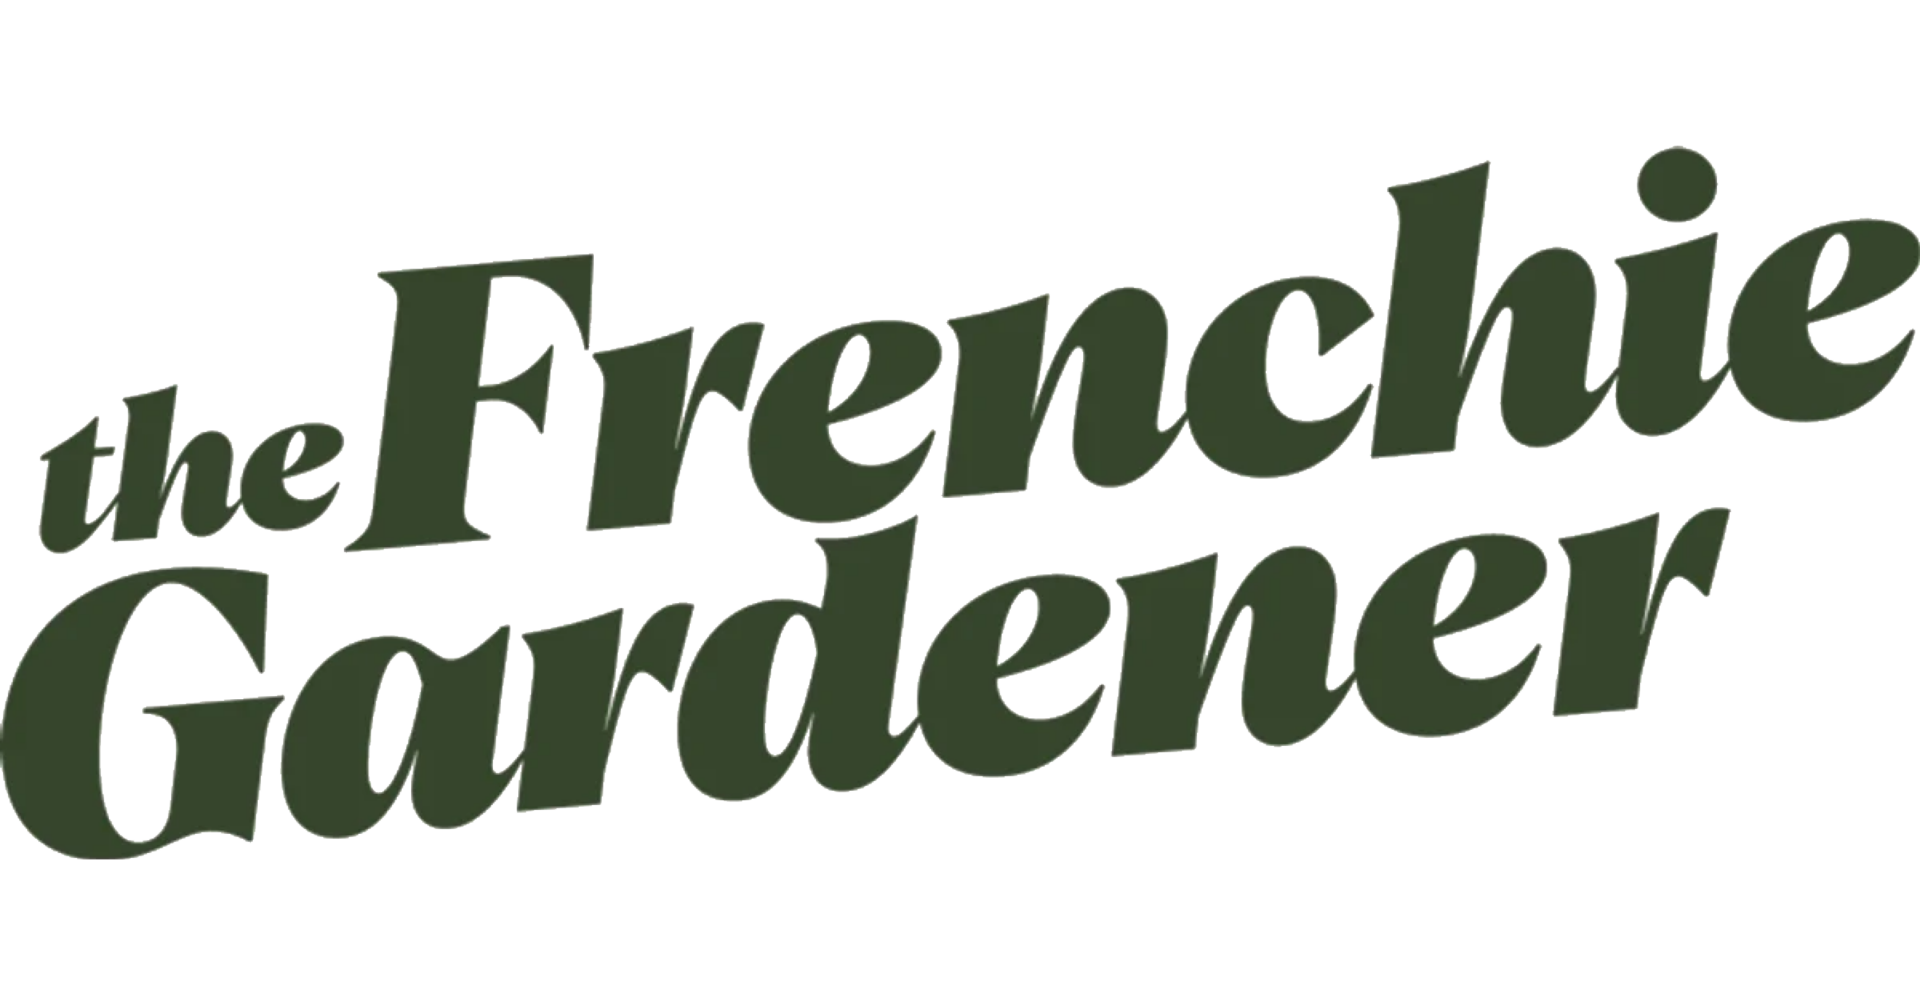 logo the frenchie gardener